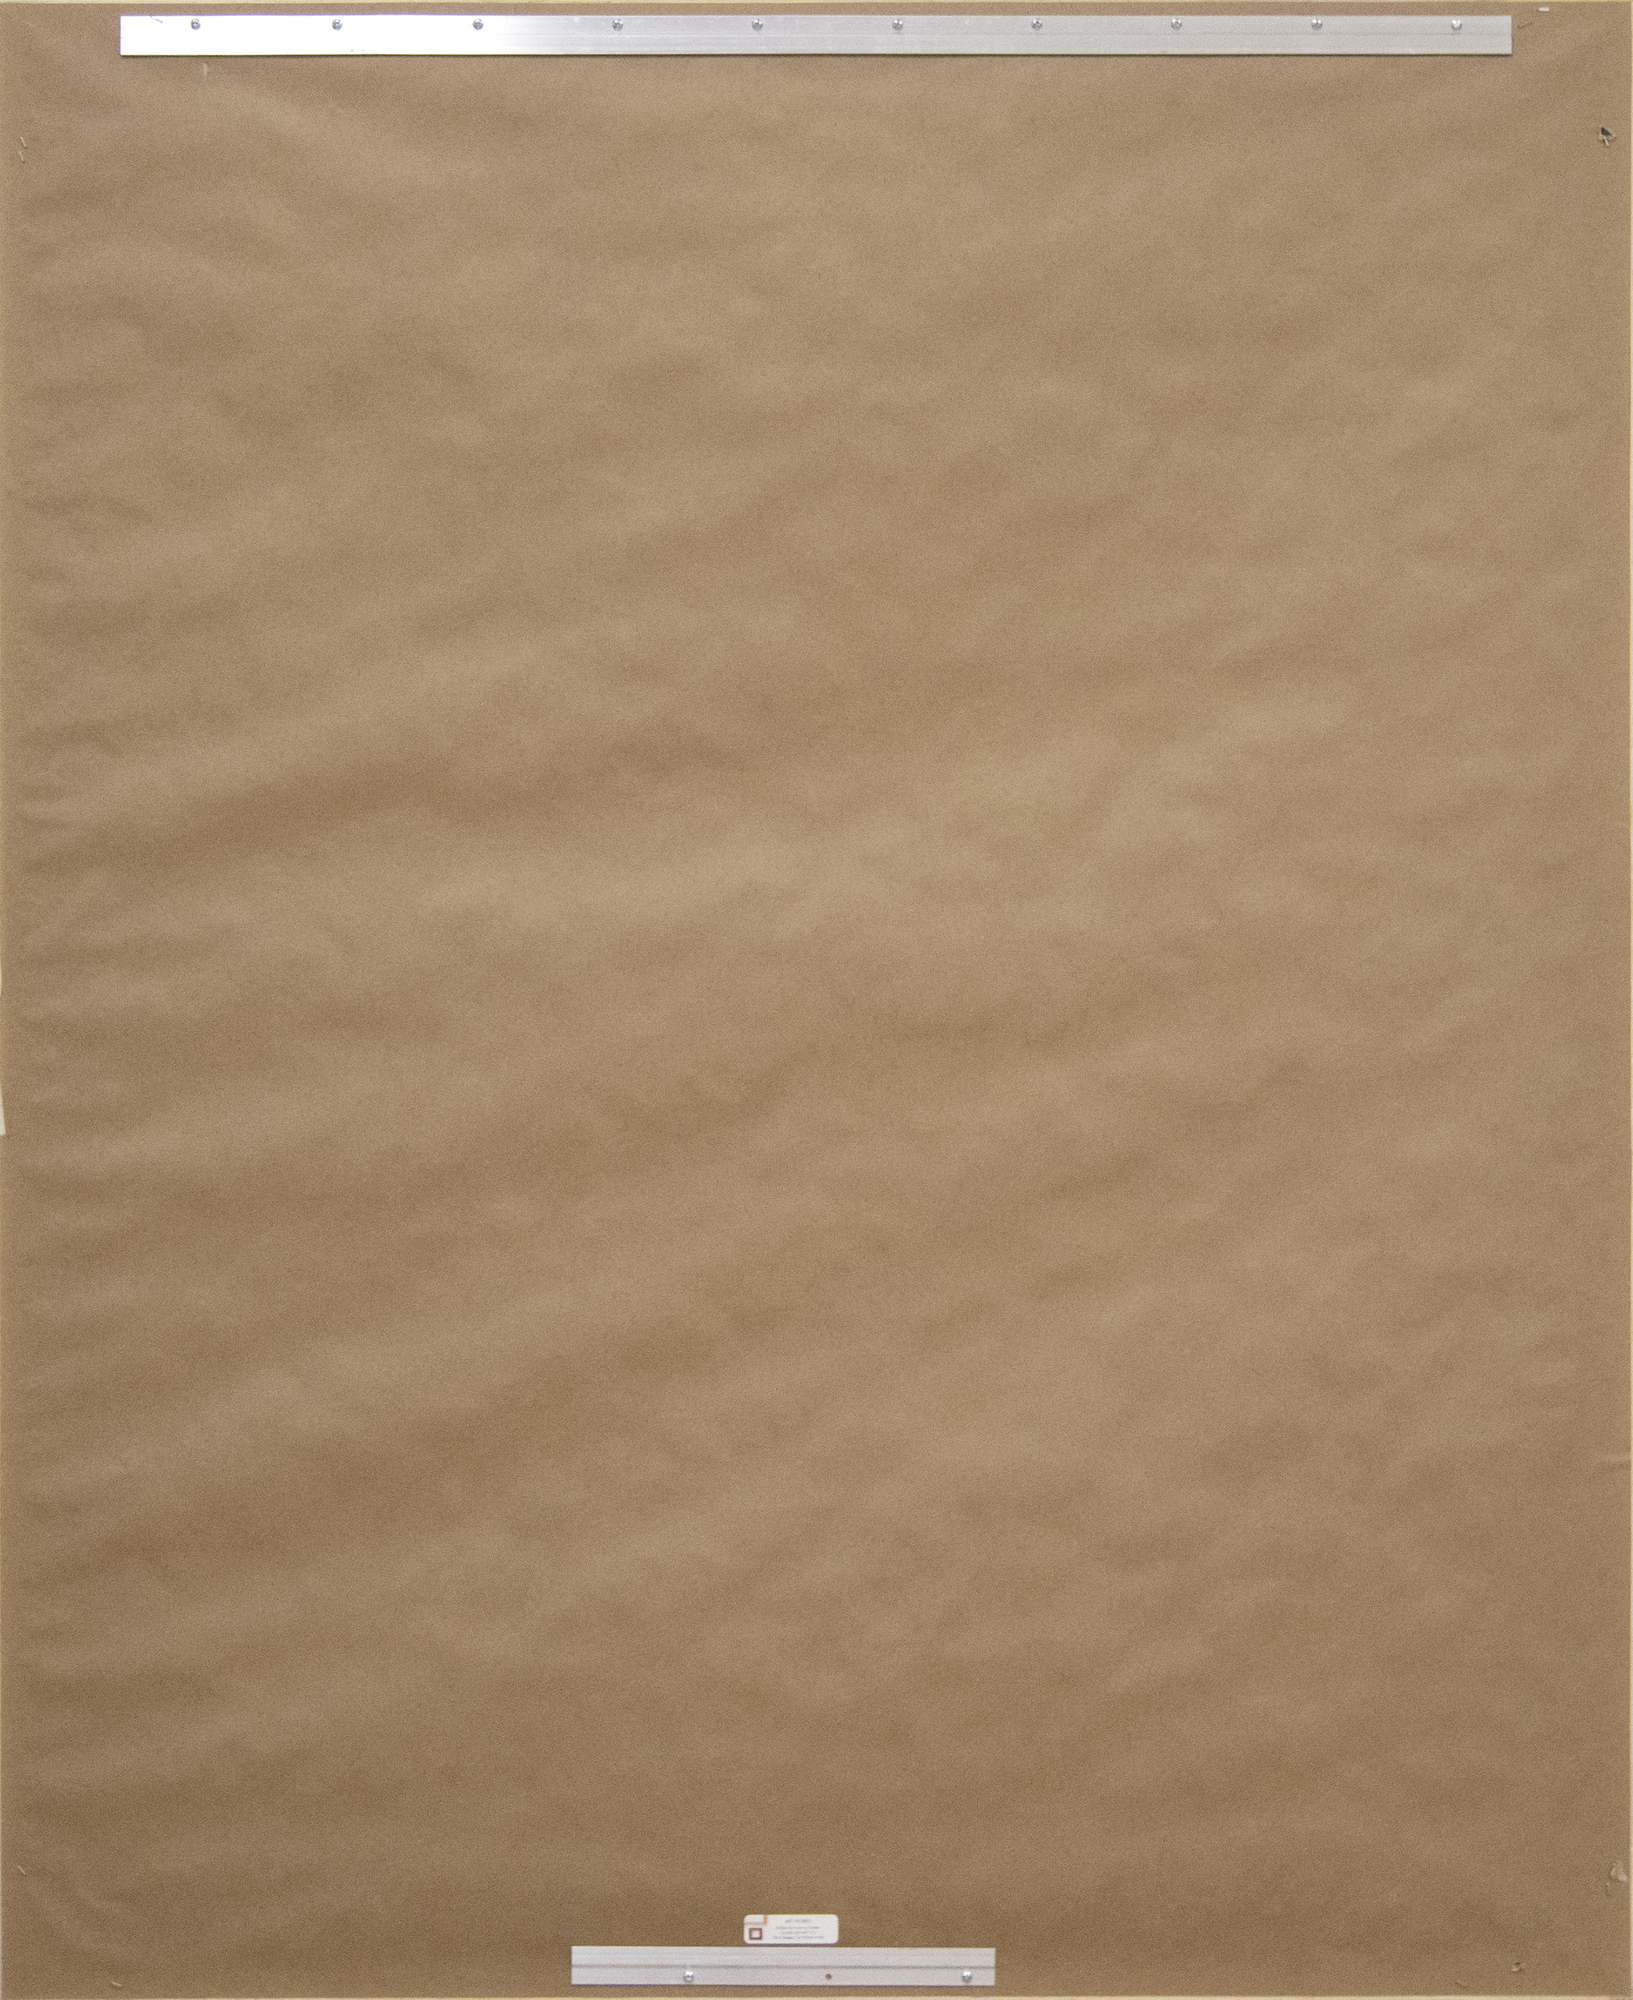 JAE KON PARK - Untitled - oil on canvas - 45 3/4 x 35 1/2 in.